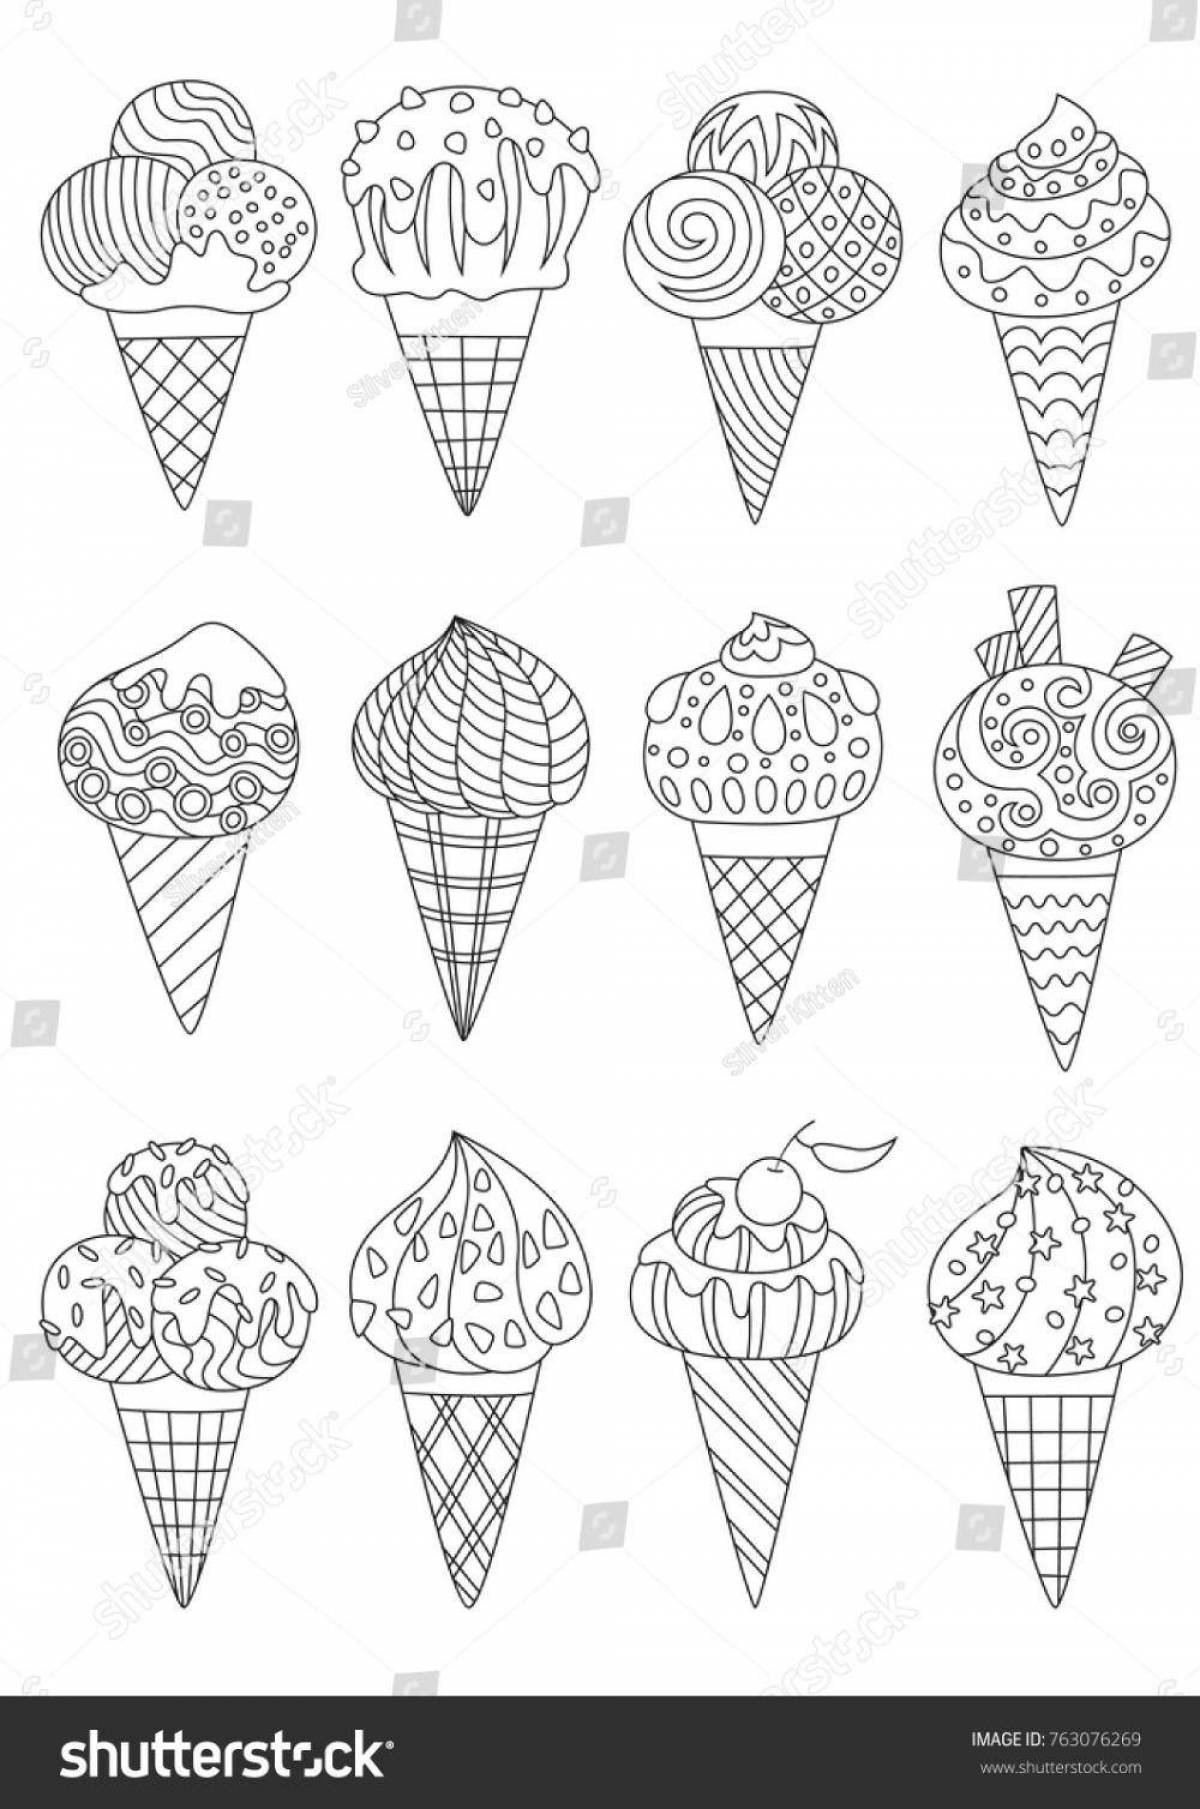 Serene antistress ice cream coloring book